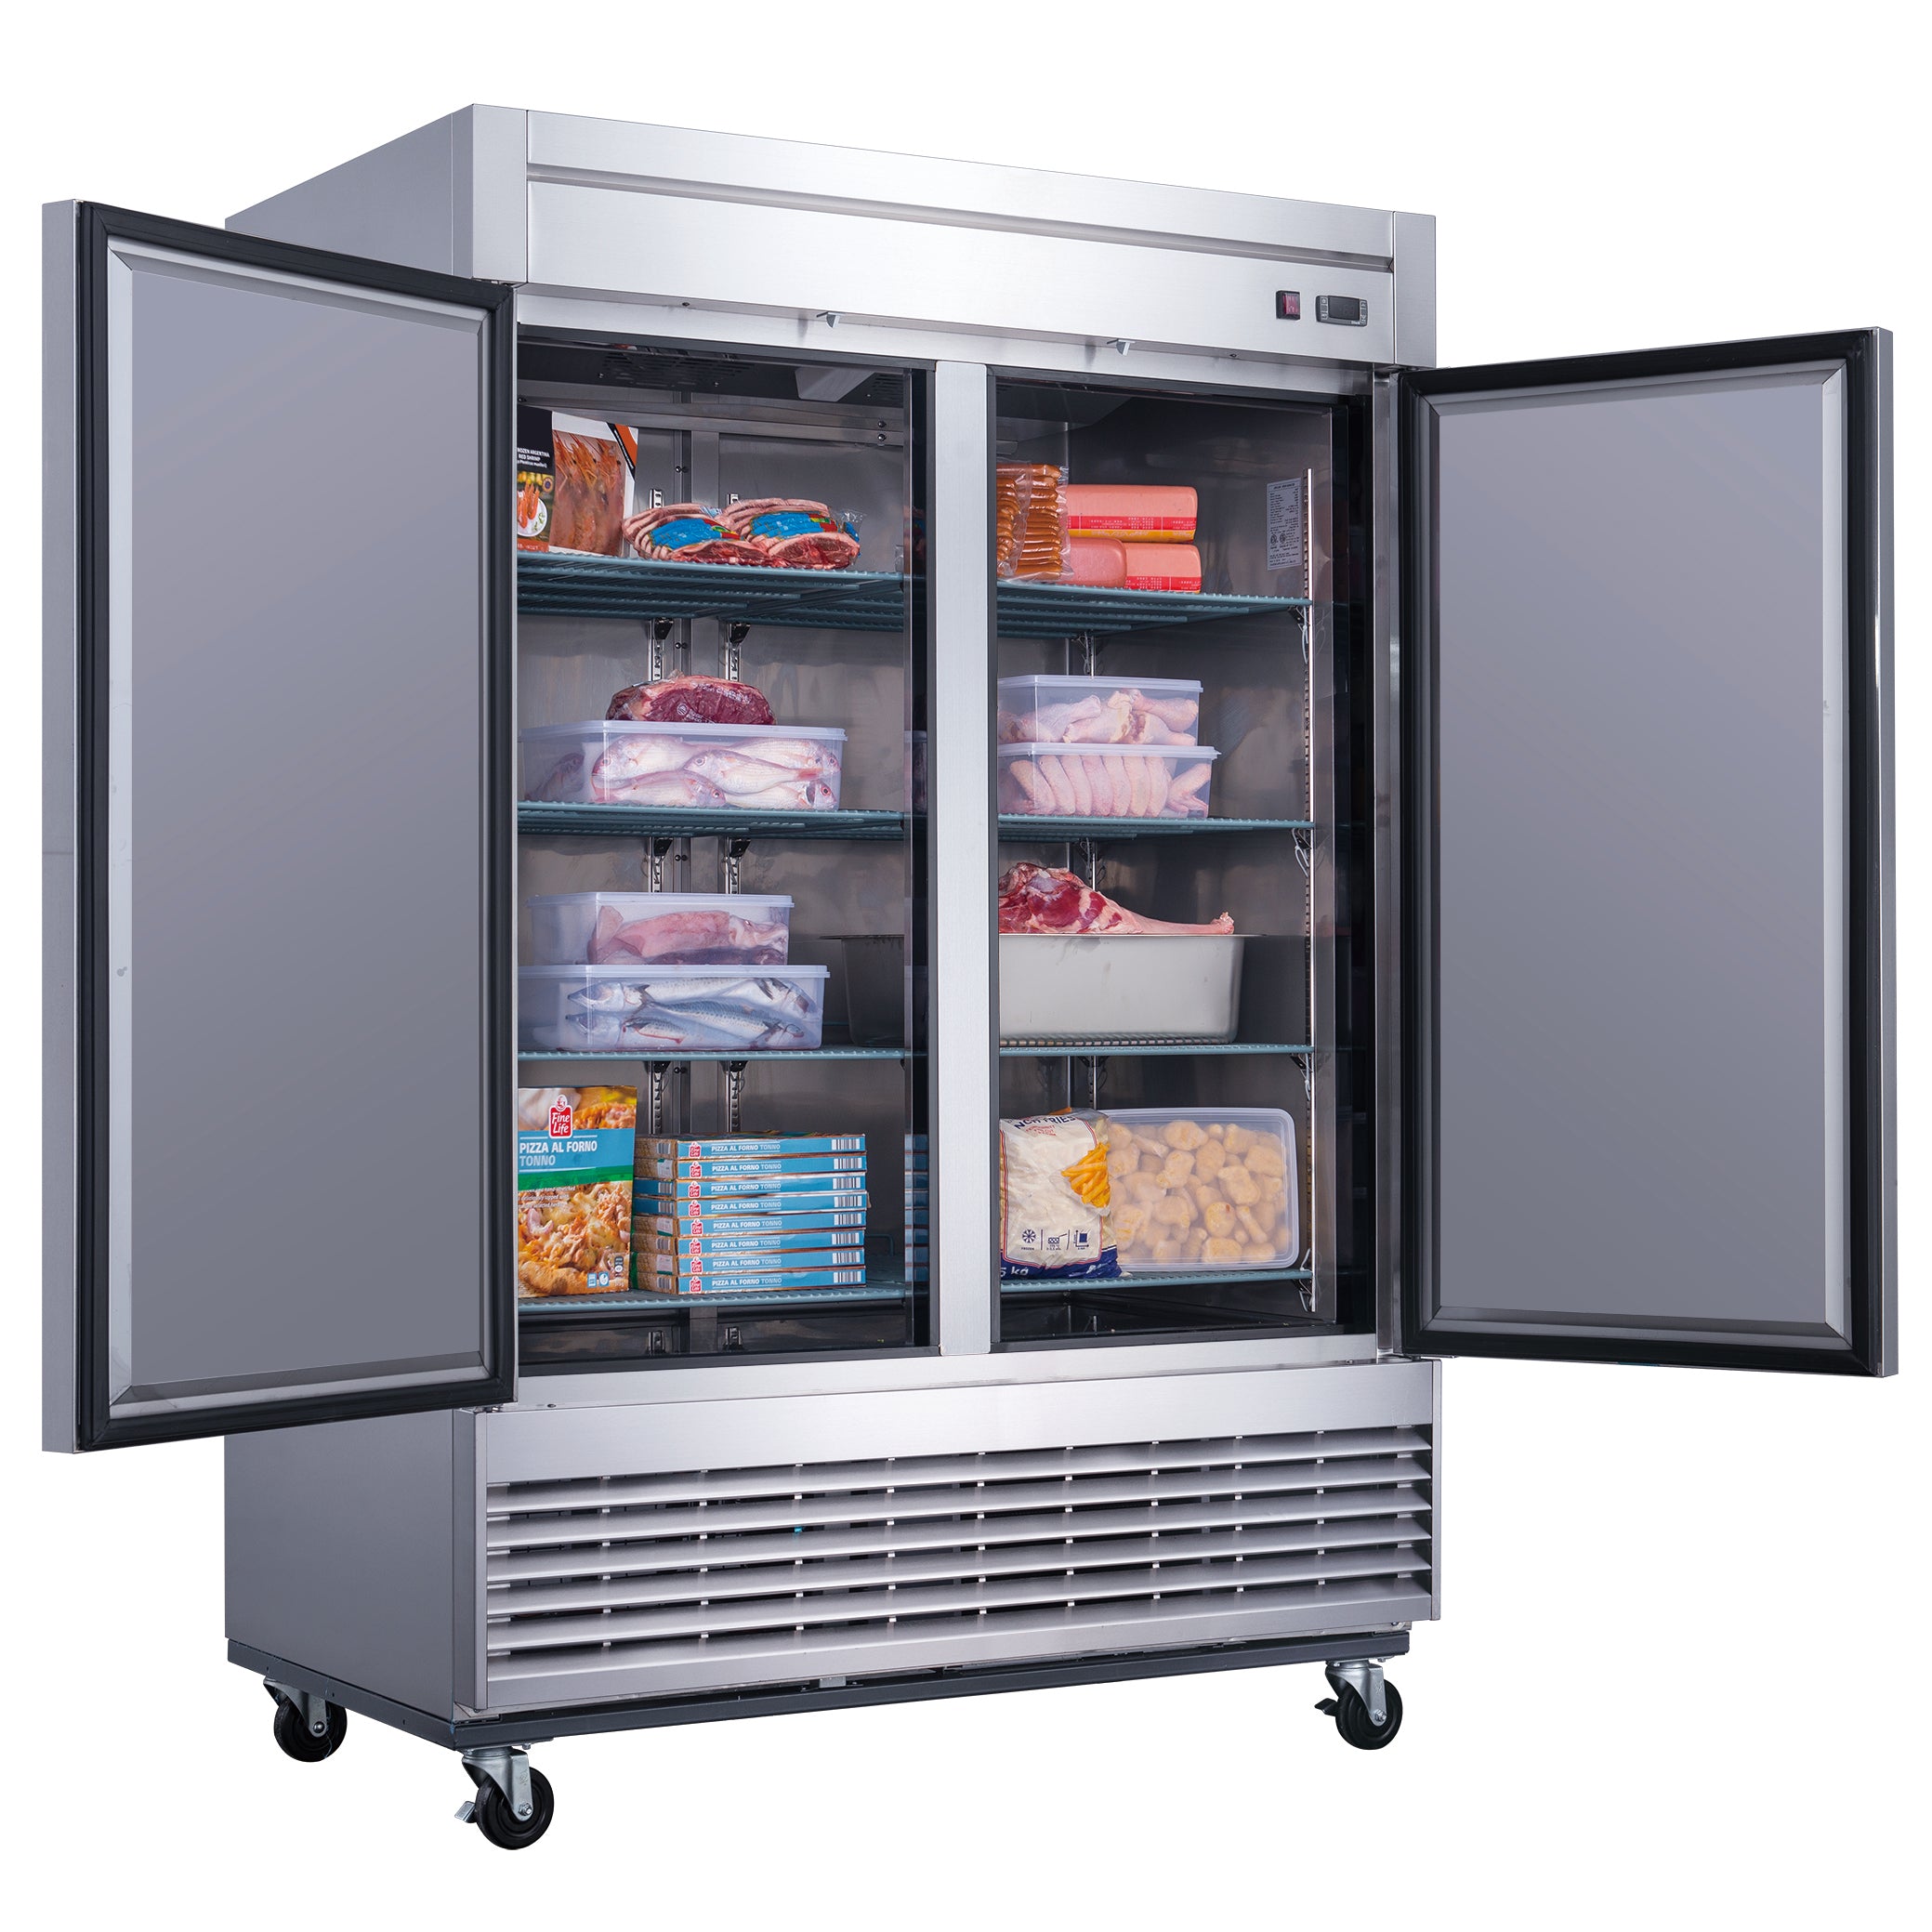 reach-in-freezer-commercial-freezer